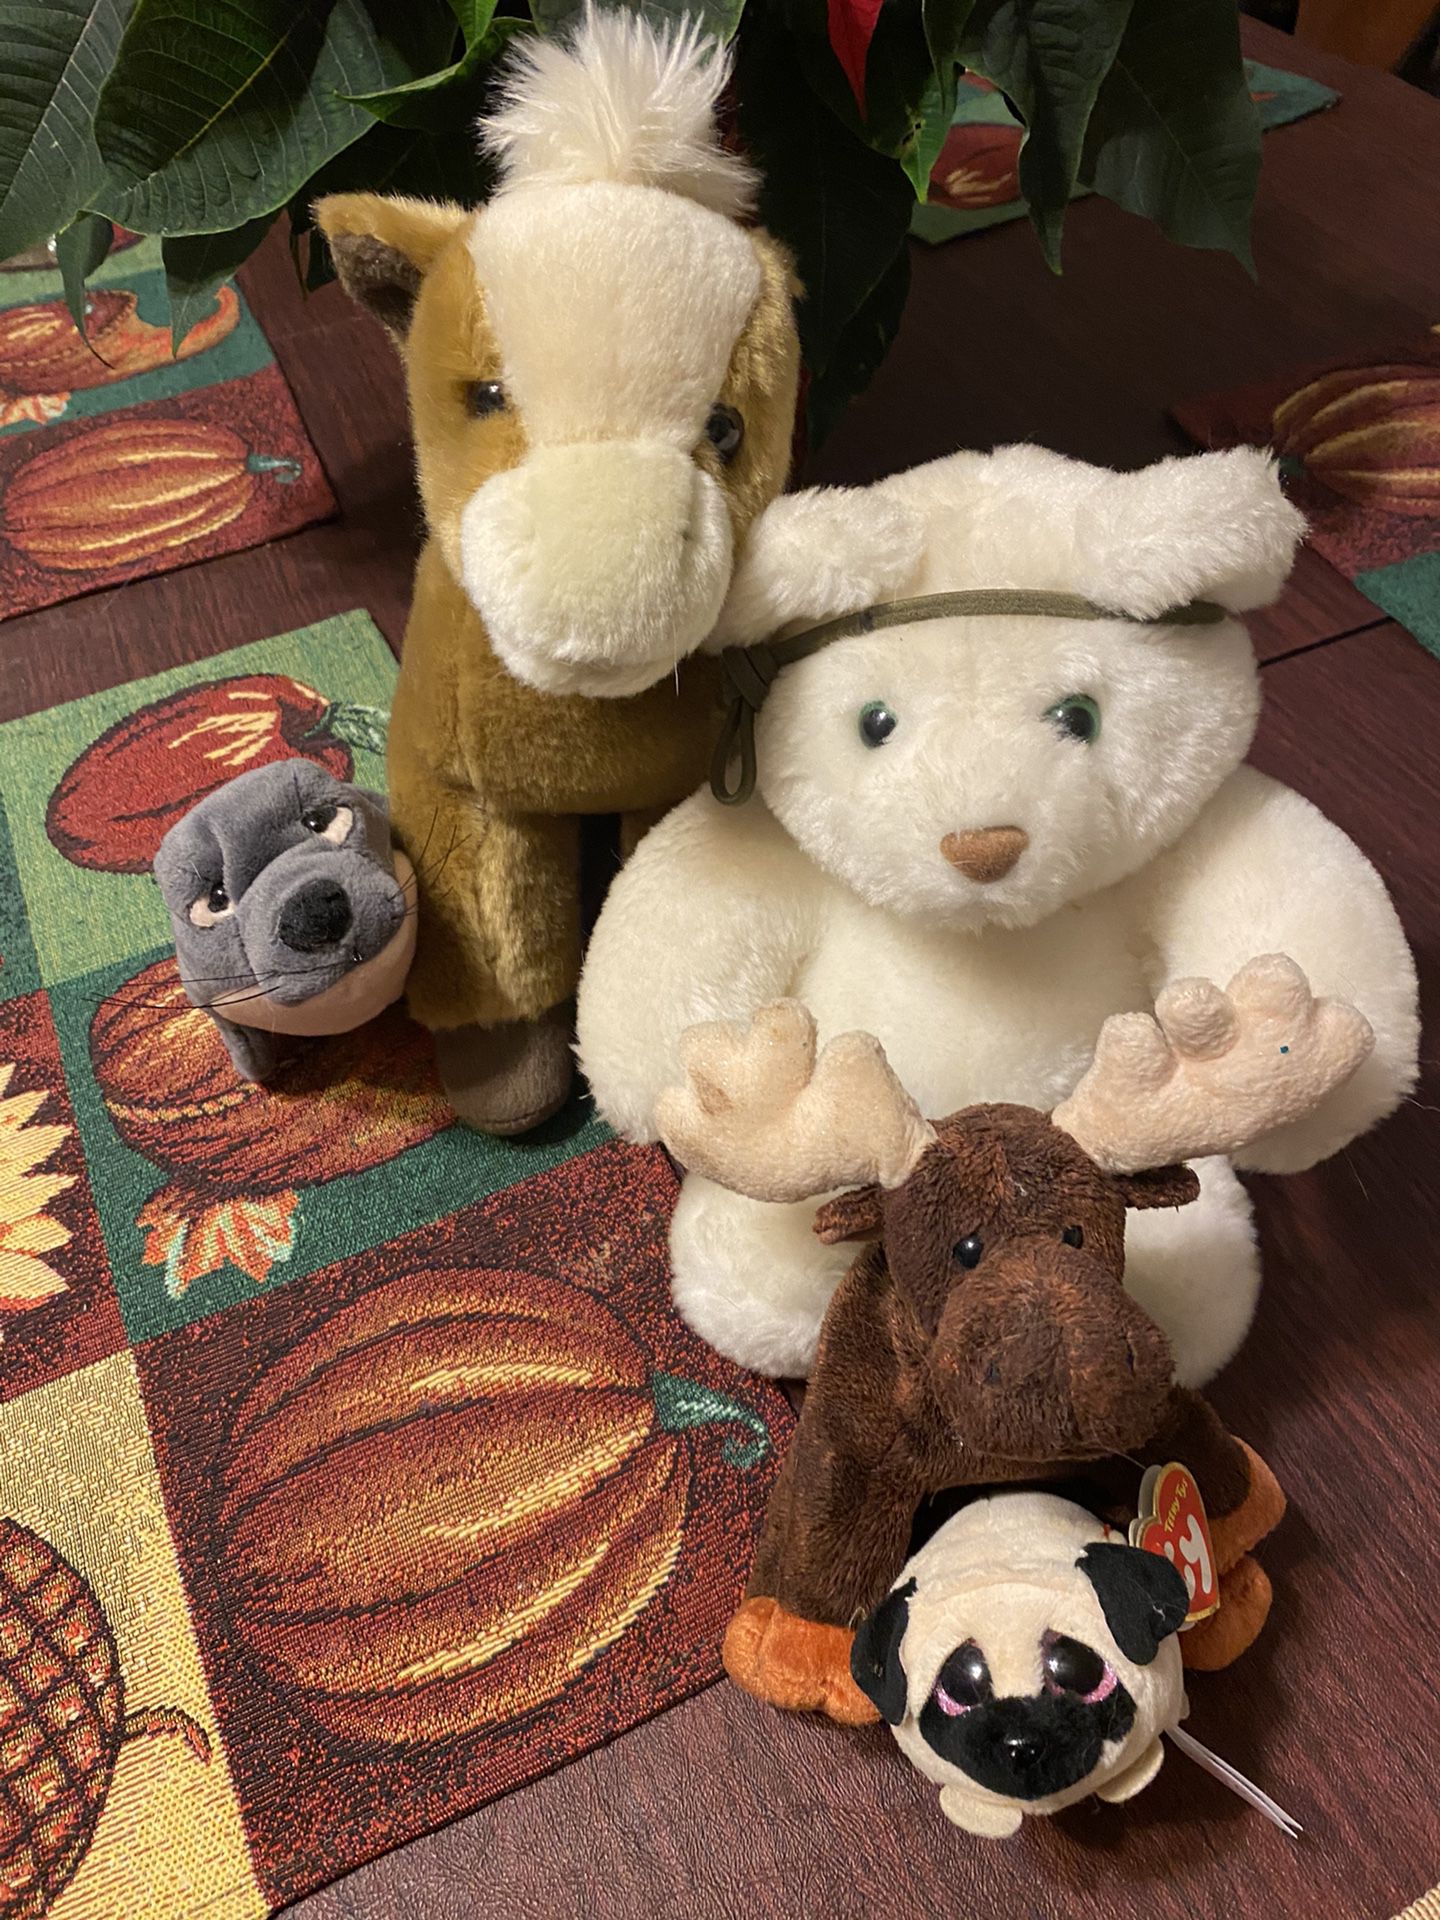 5 stuffed animals